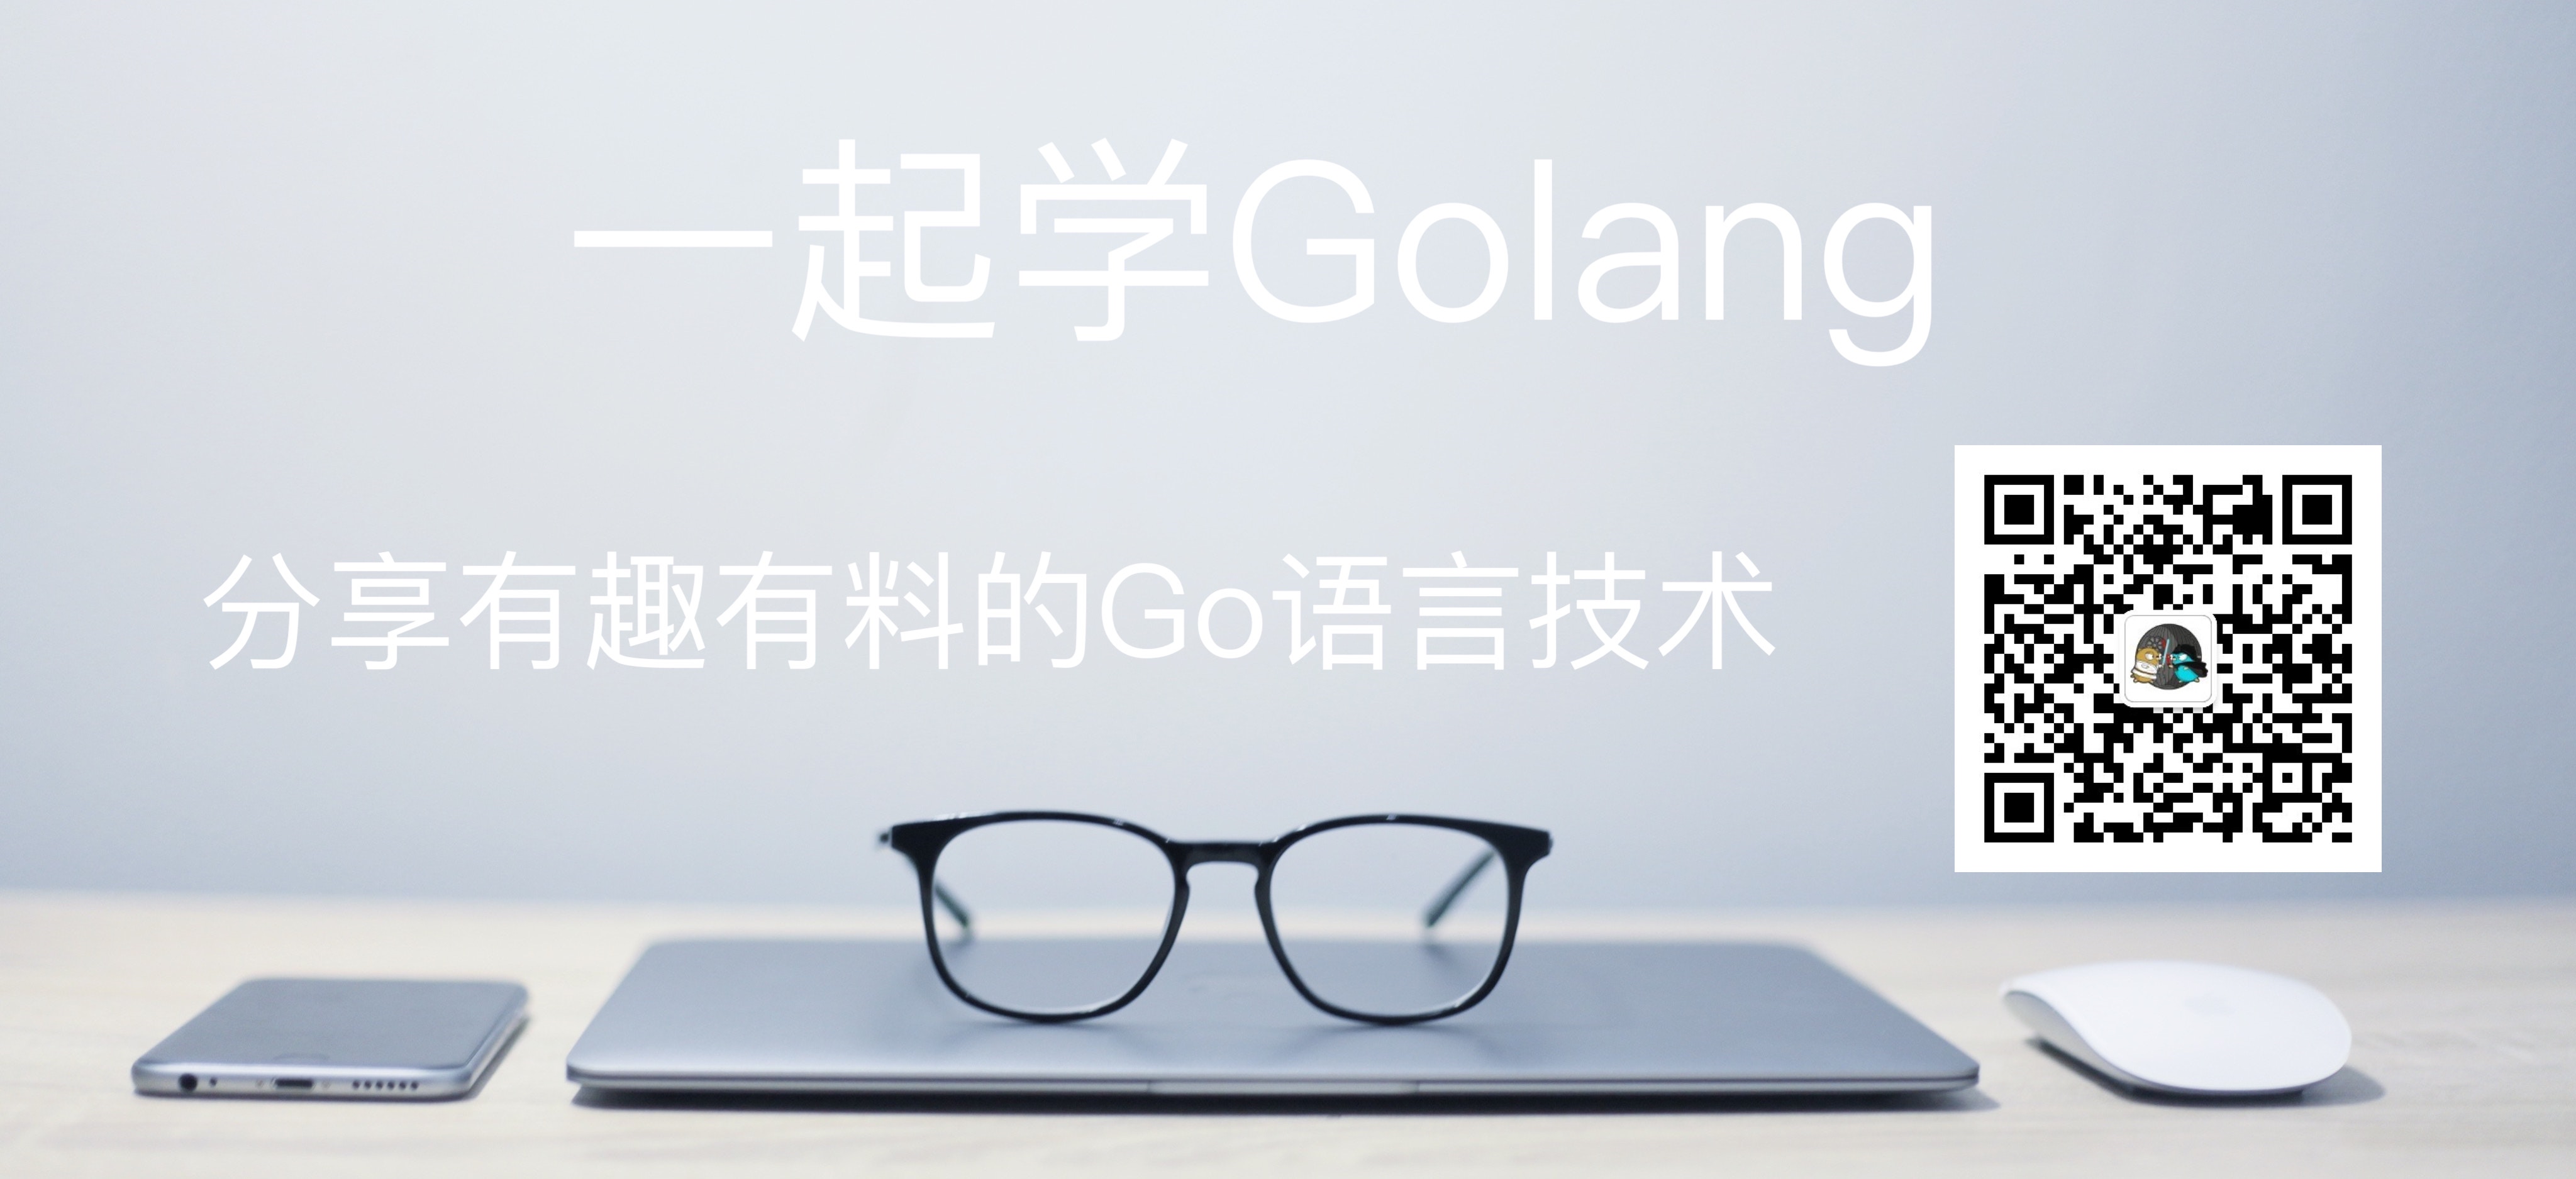 一起学Golang-分享有料的Go语言技术